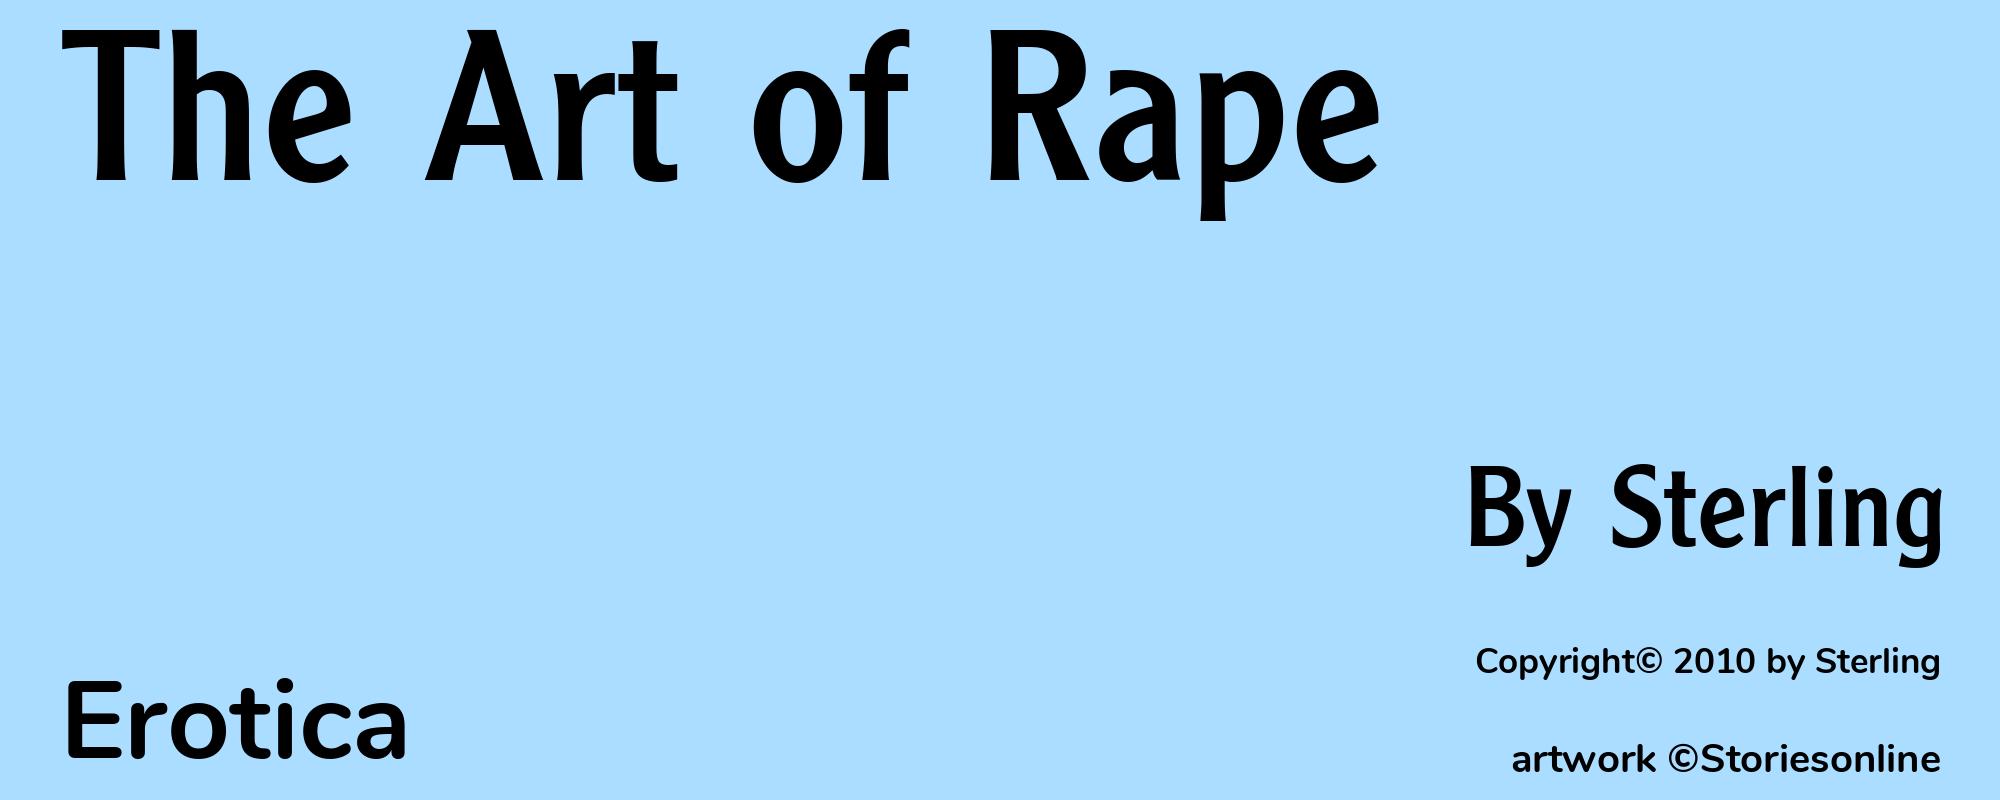 The Art of Rape - Cover